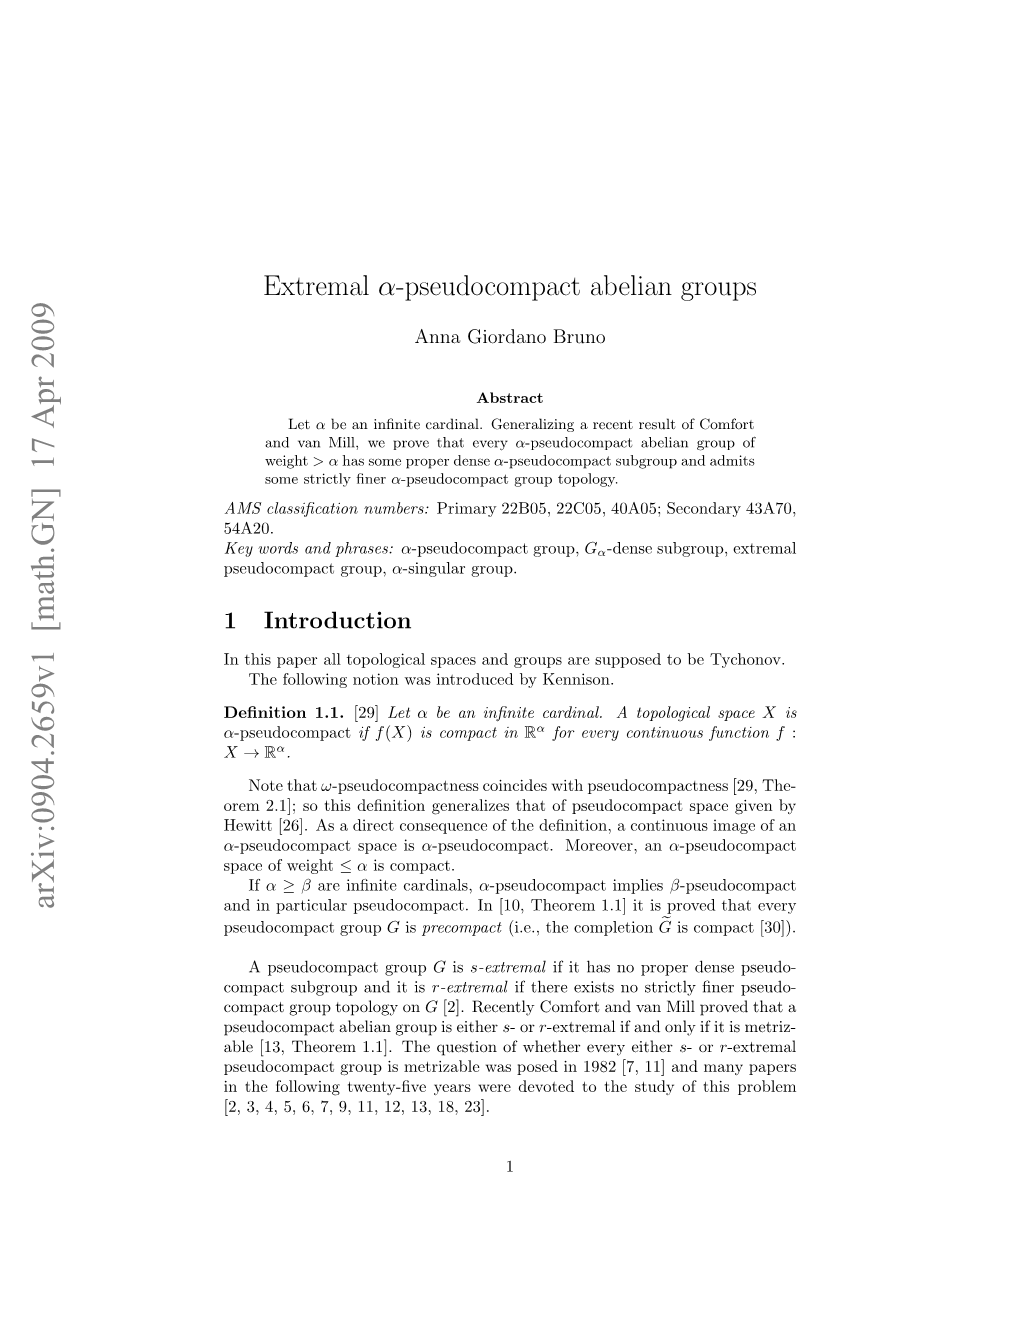 Extremal K-Pseudocompact Abelian Groups